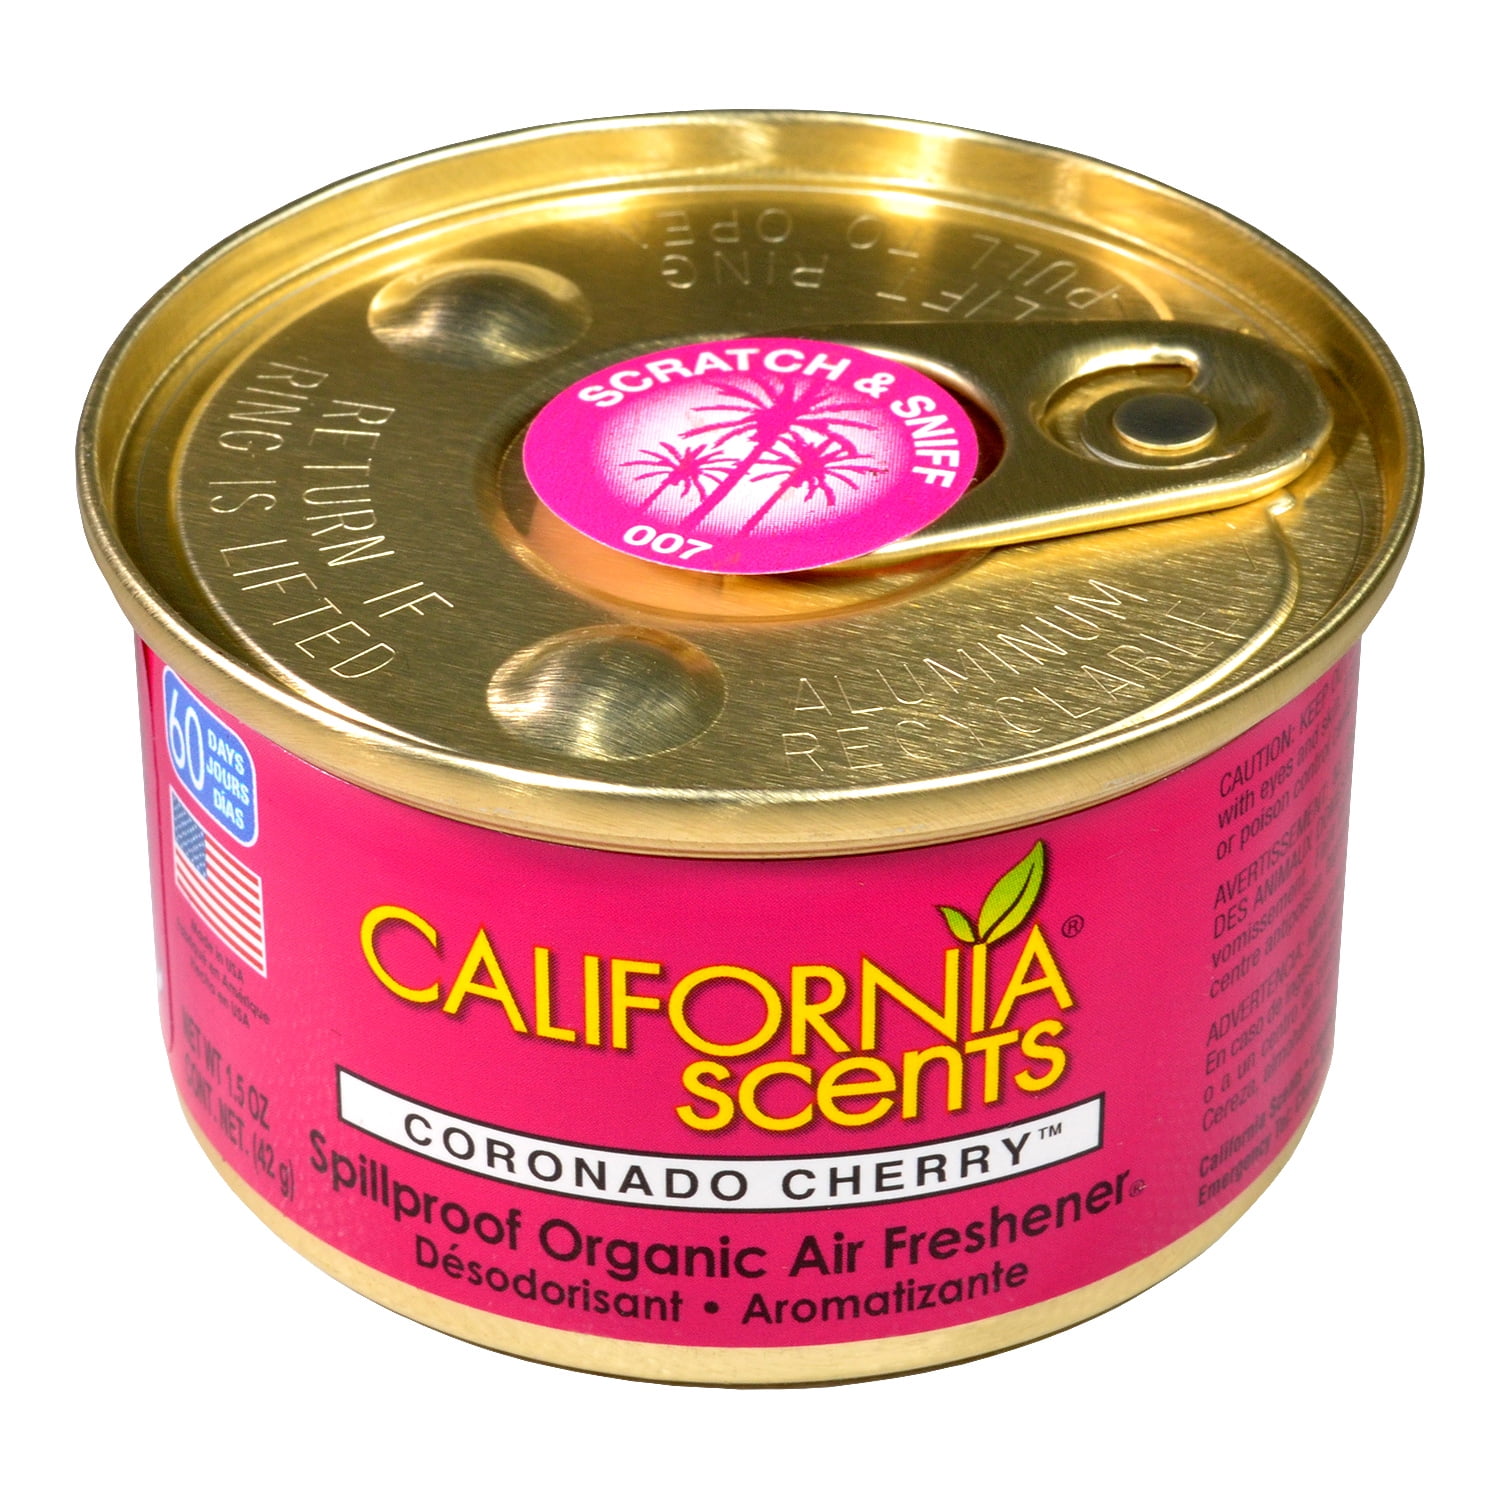 California Scents F312 Air Freshener Cherry Scent, Coronado Cherry, 2 units